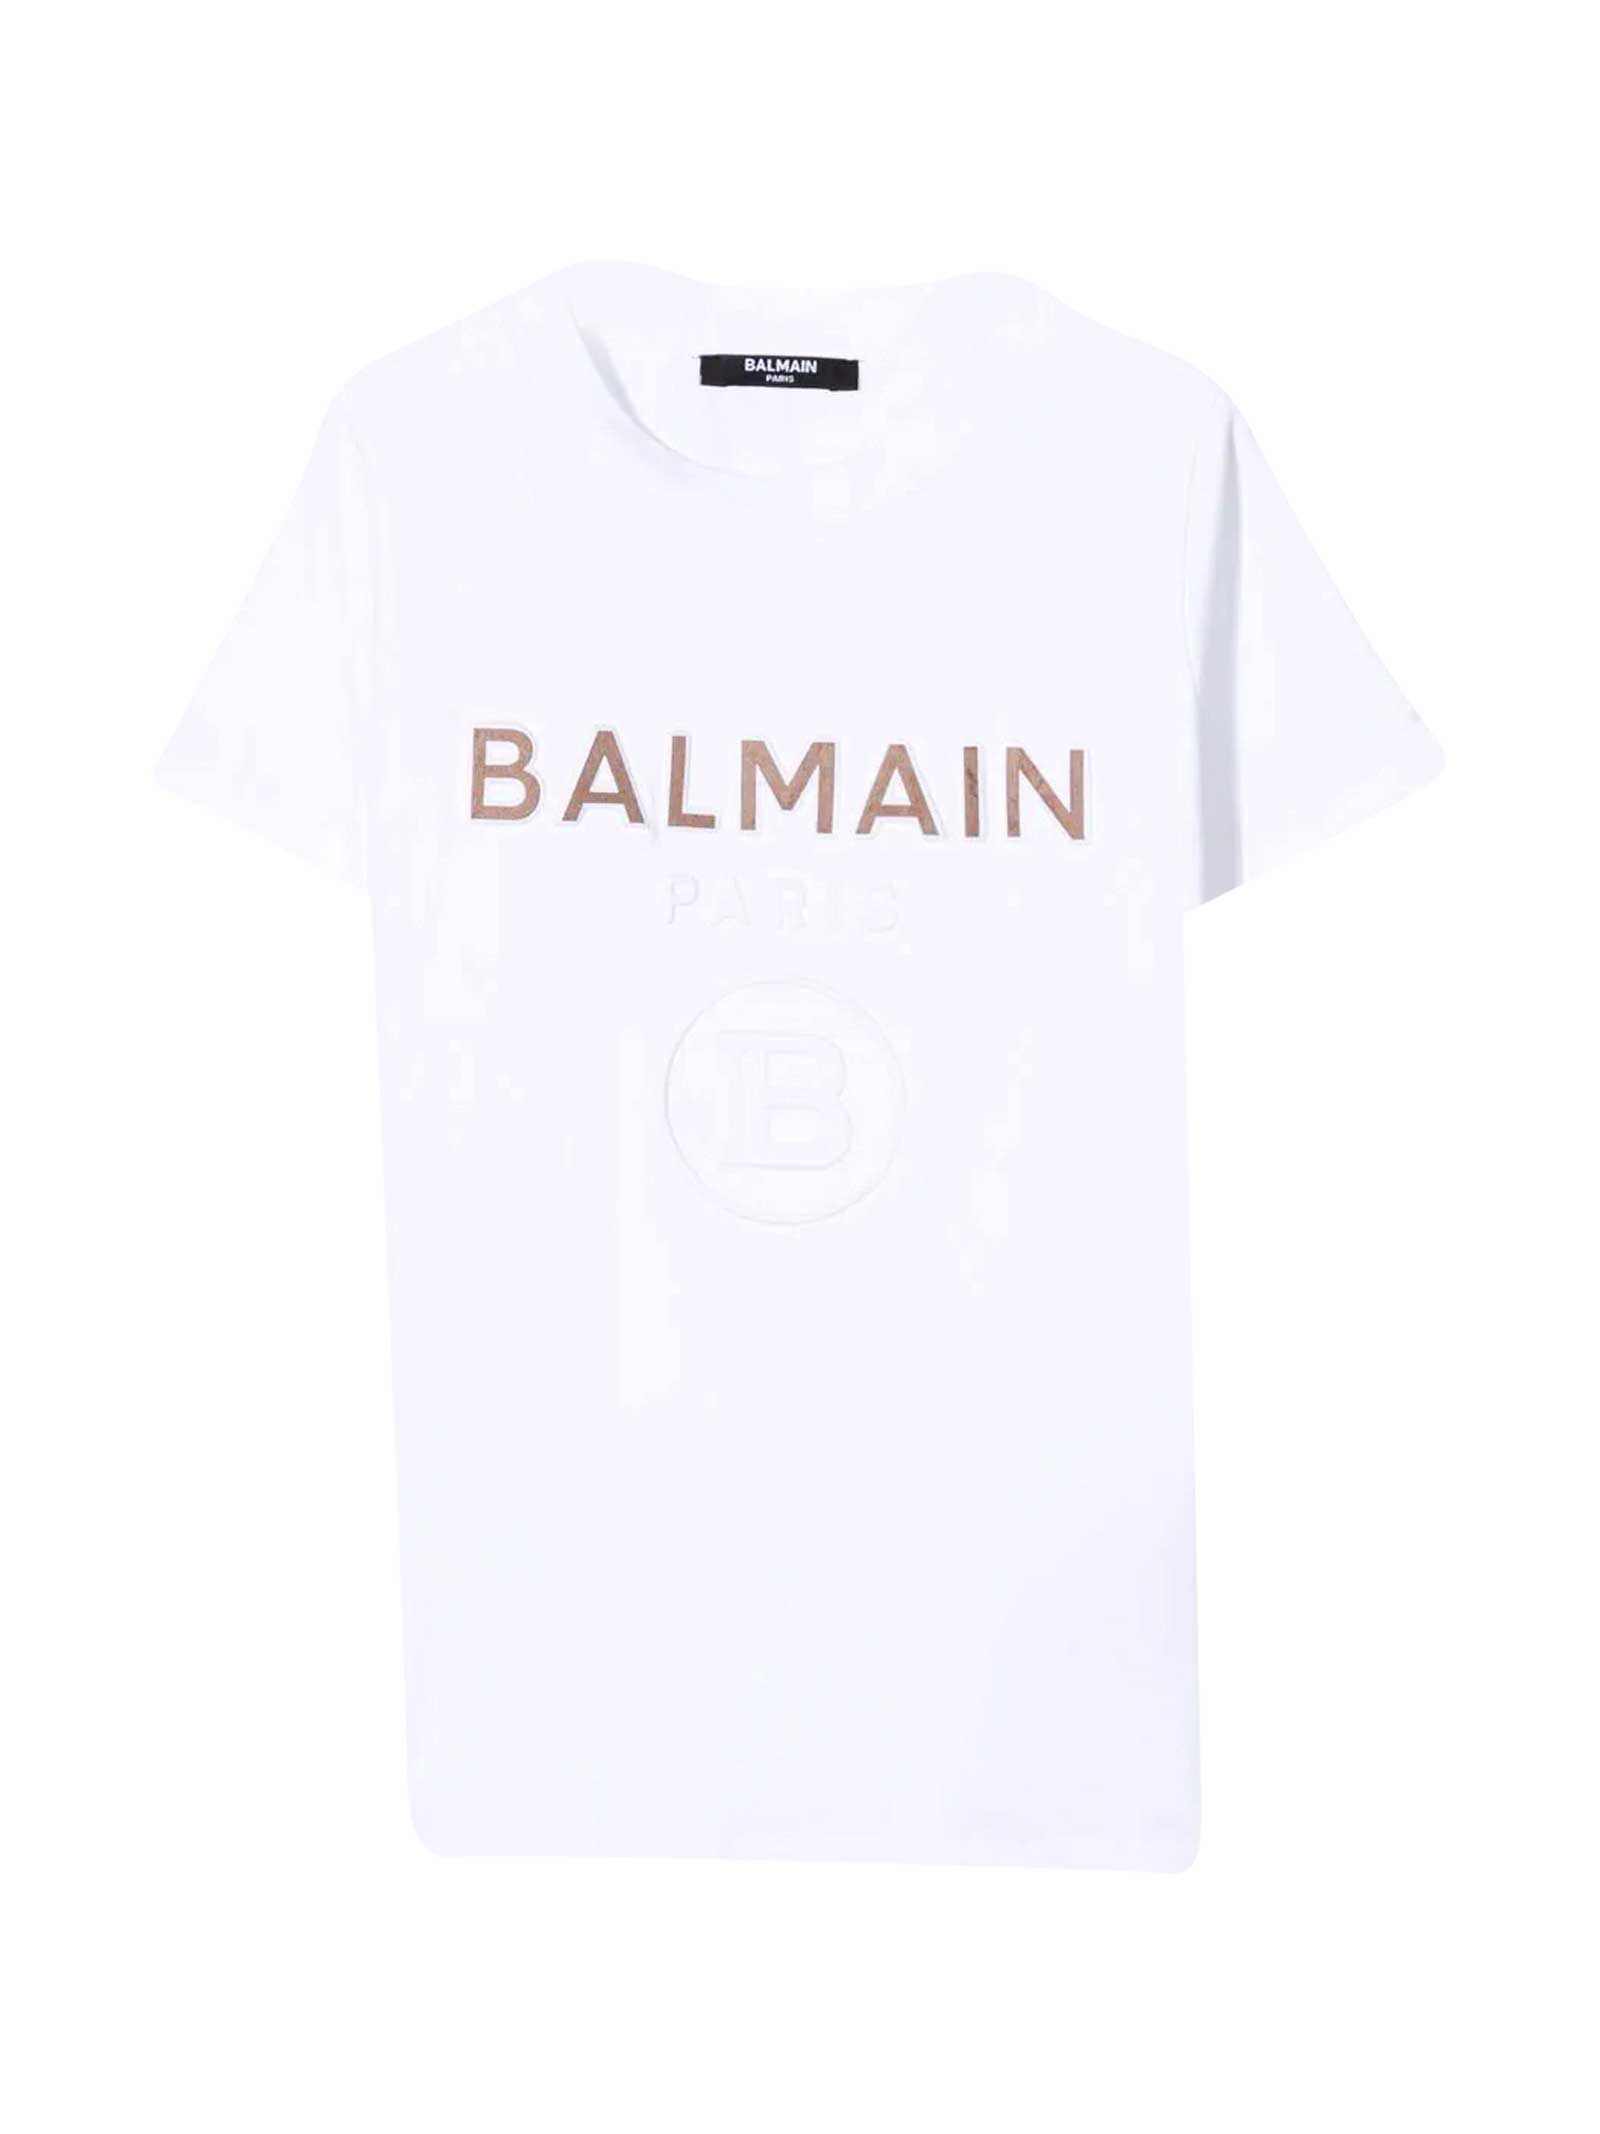 BALMAIN WHITE TEEN T-SHIRT,6O8521OX400 100T